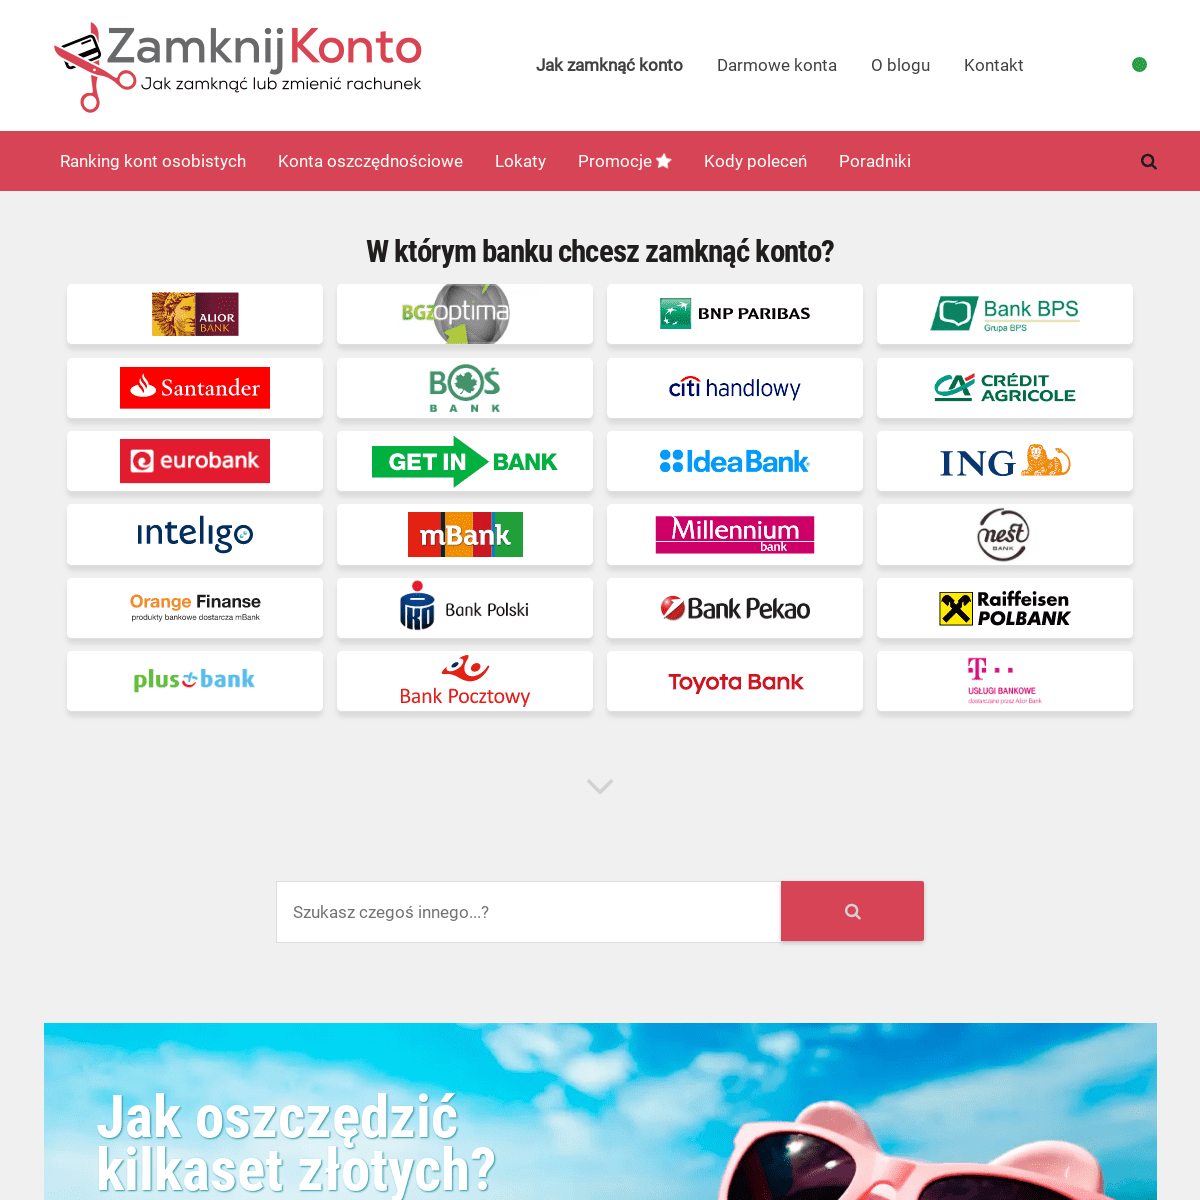 A complete backup of zamknijkonto.pl